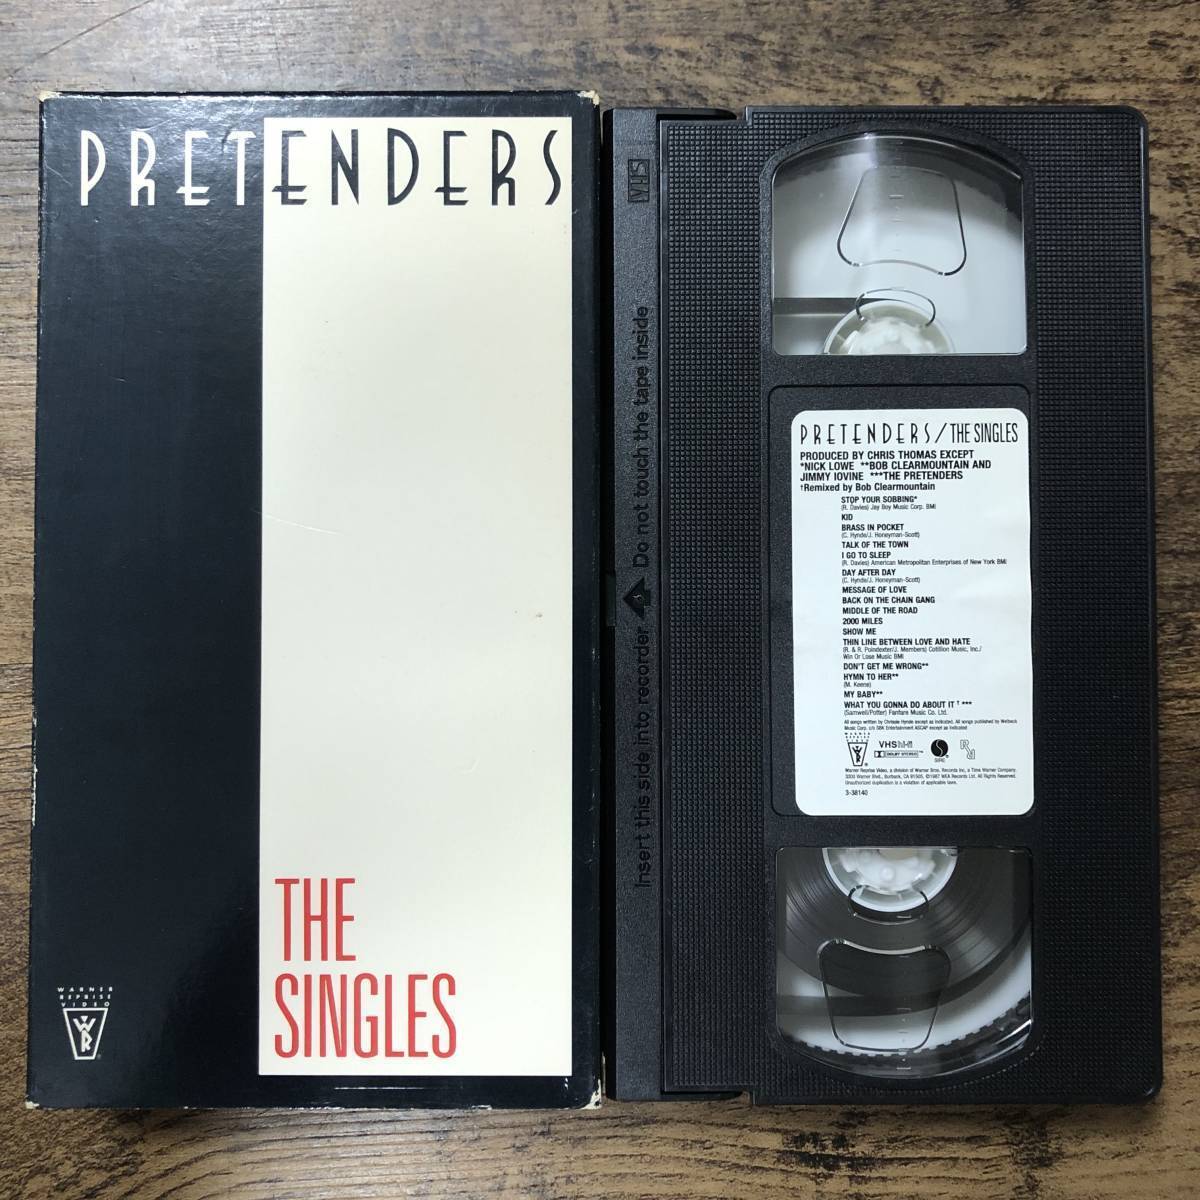 J-603 ■ ПРЕДОСТАВЛЕНИЯ / The Singles ■ ПРИЛОЖЕНИЯ VHS VIDEA TAPE ■